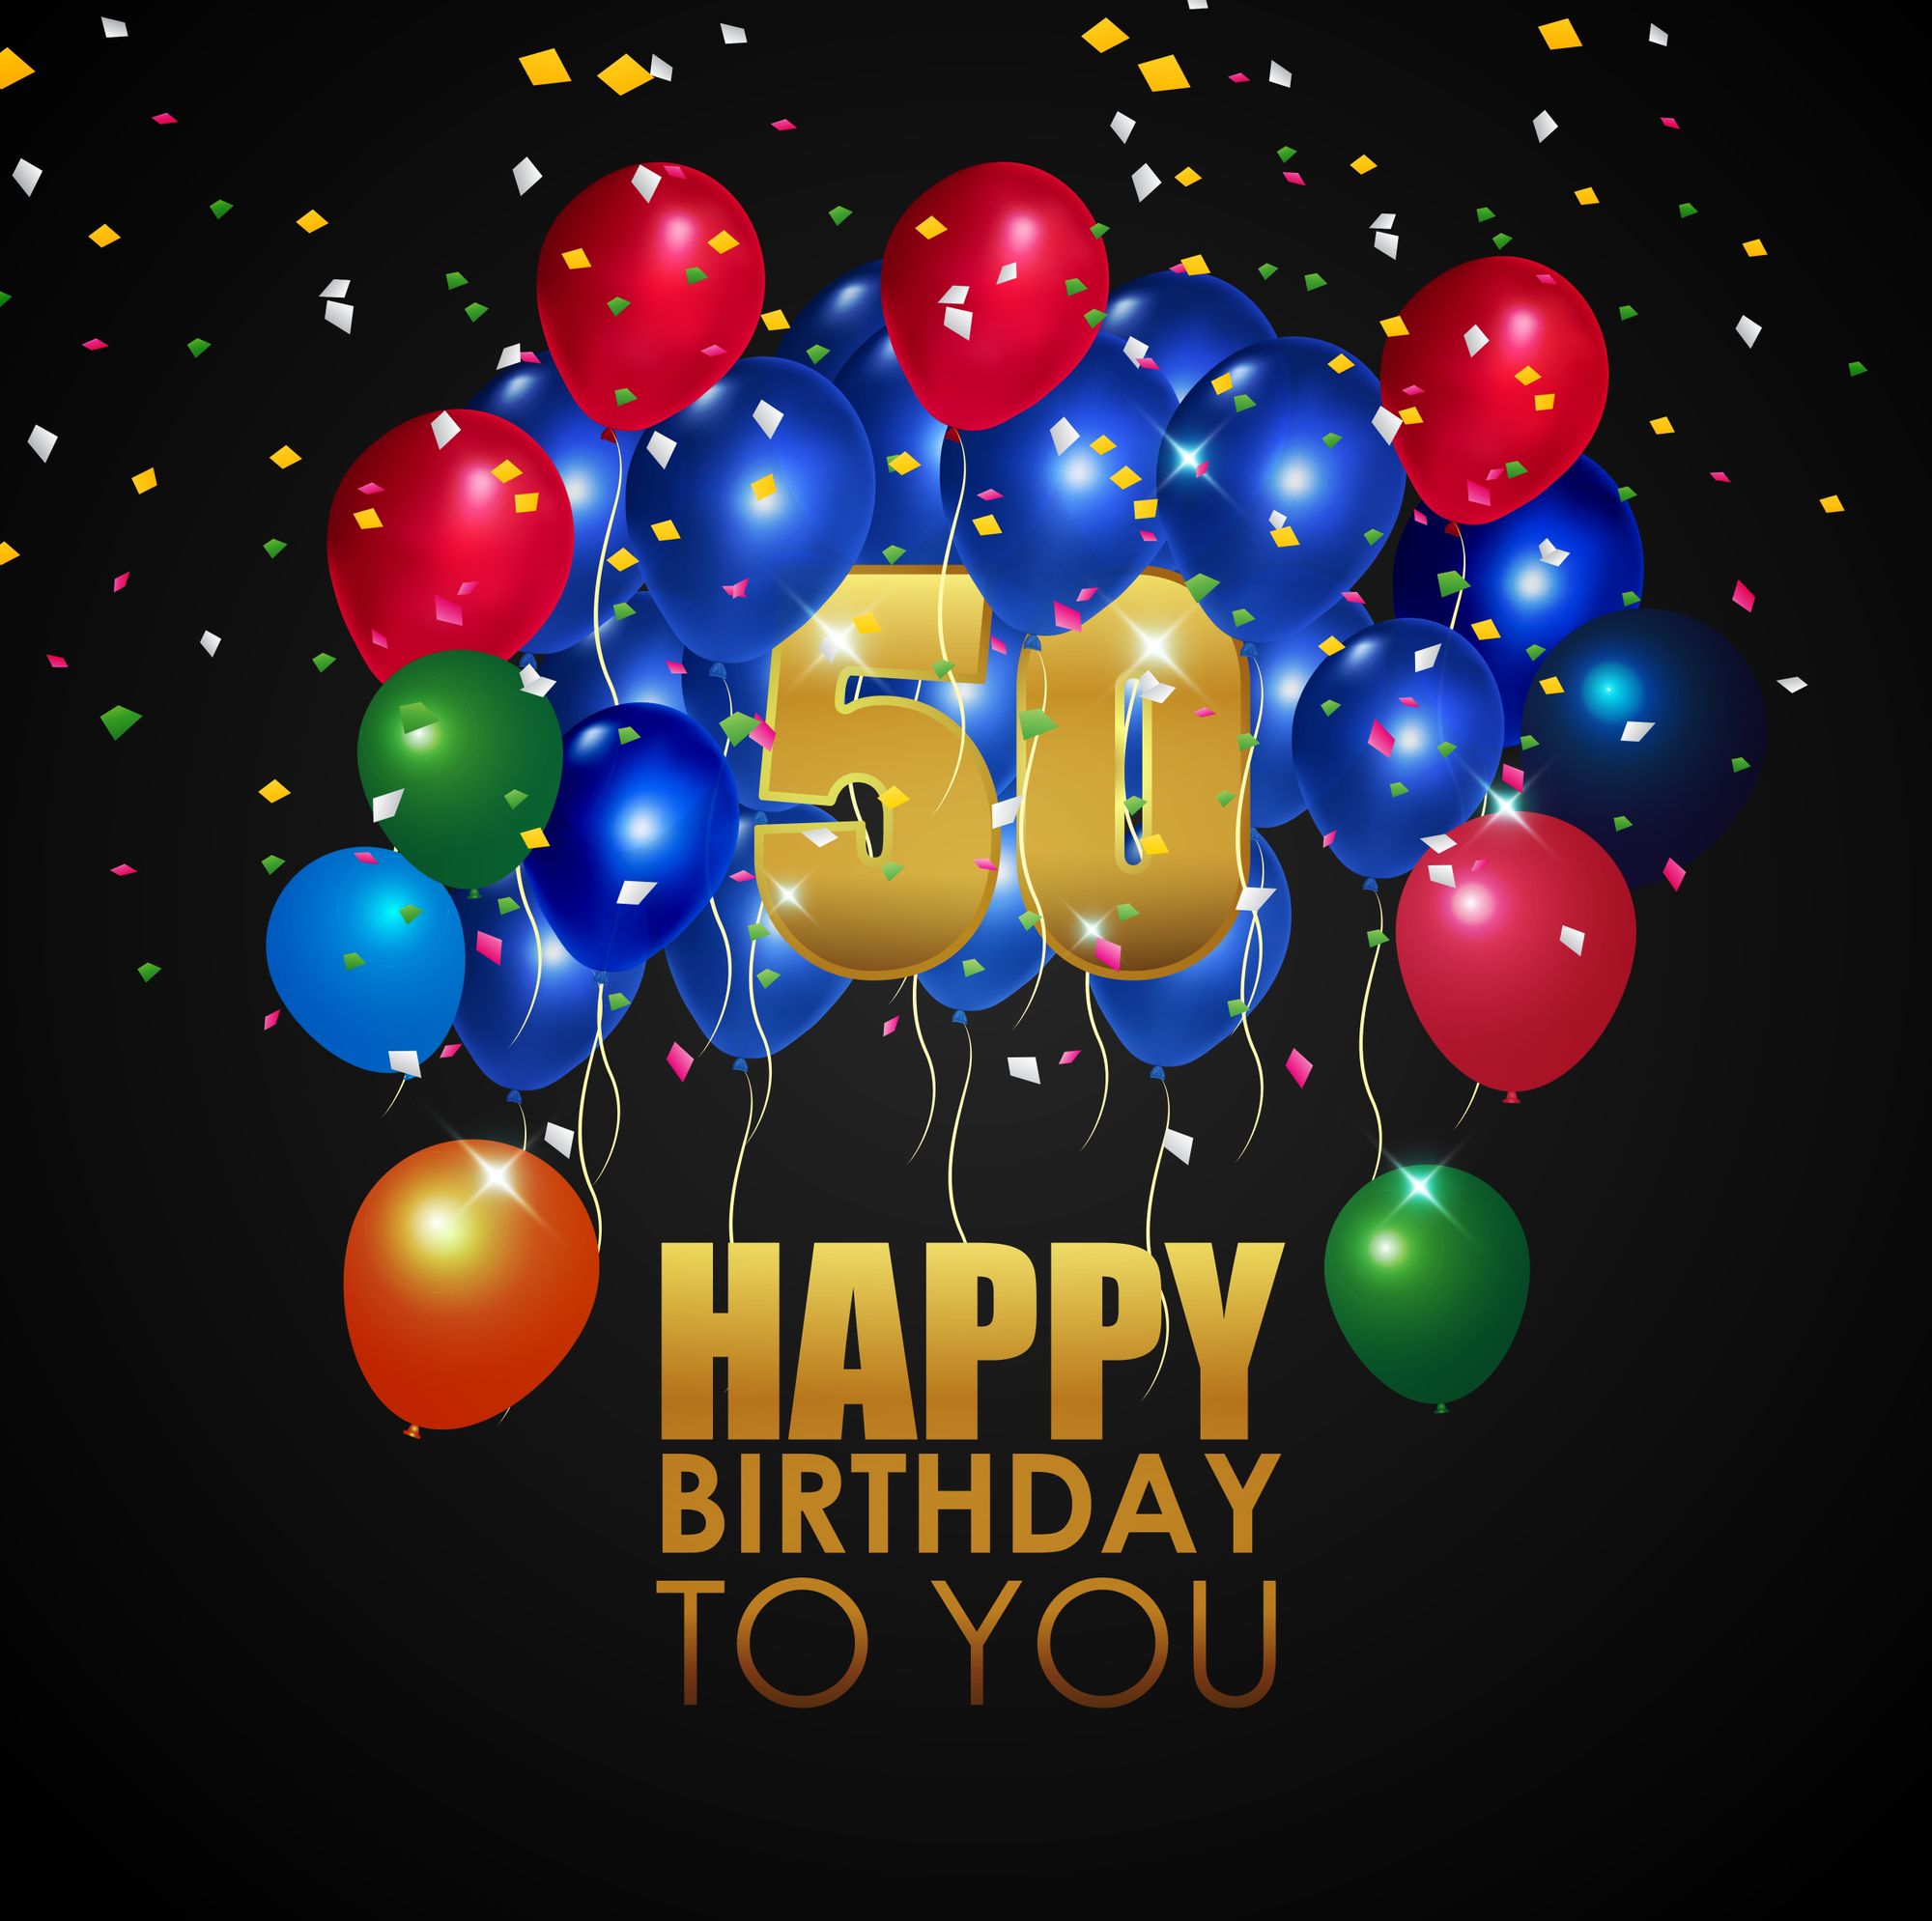 Happy 50th Birthday Images Free - Birthday Ideas